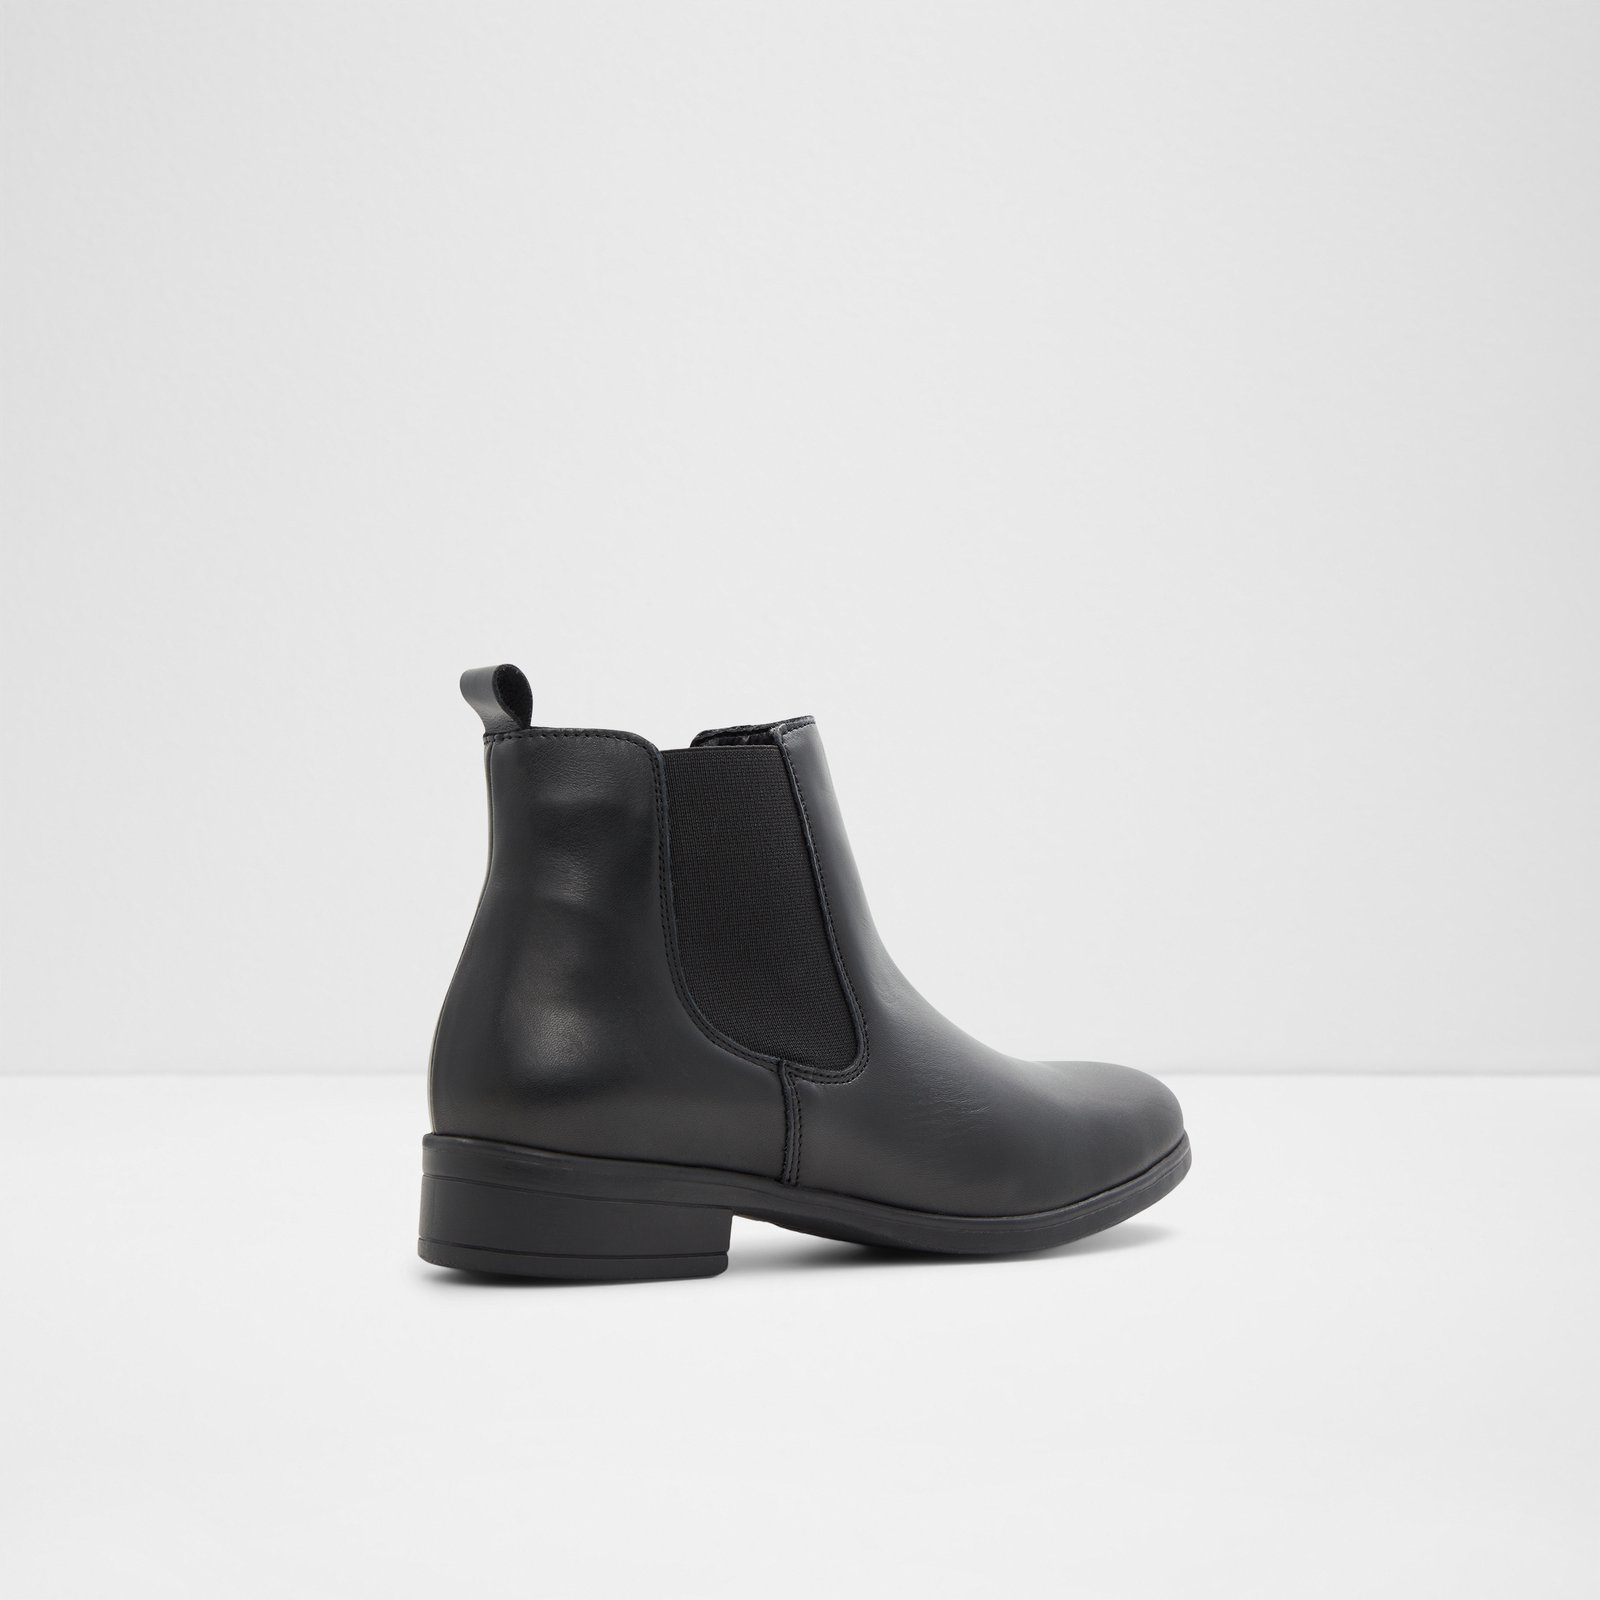 Image of ALDO Wicoeni - Women's Ankle Boot - Black, Size 6